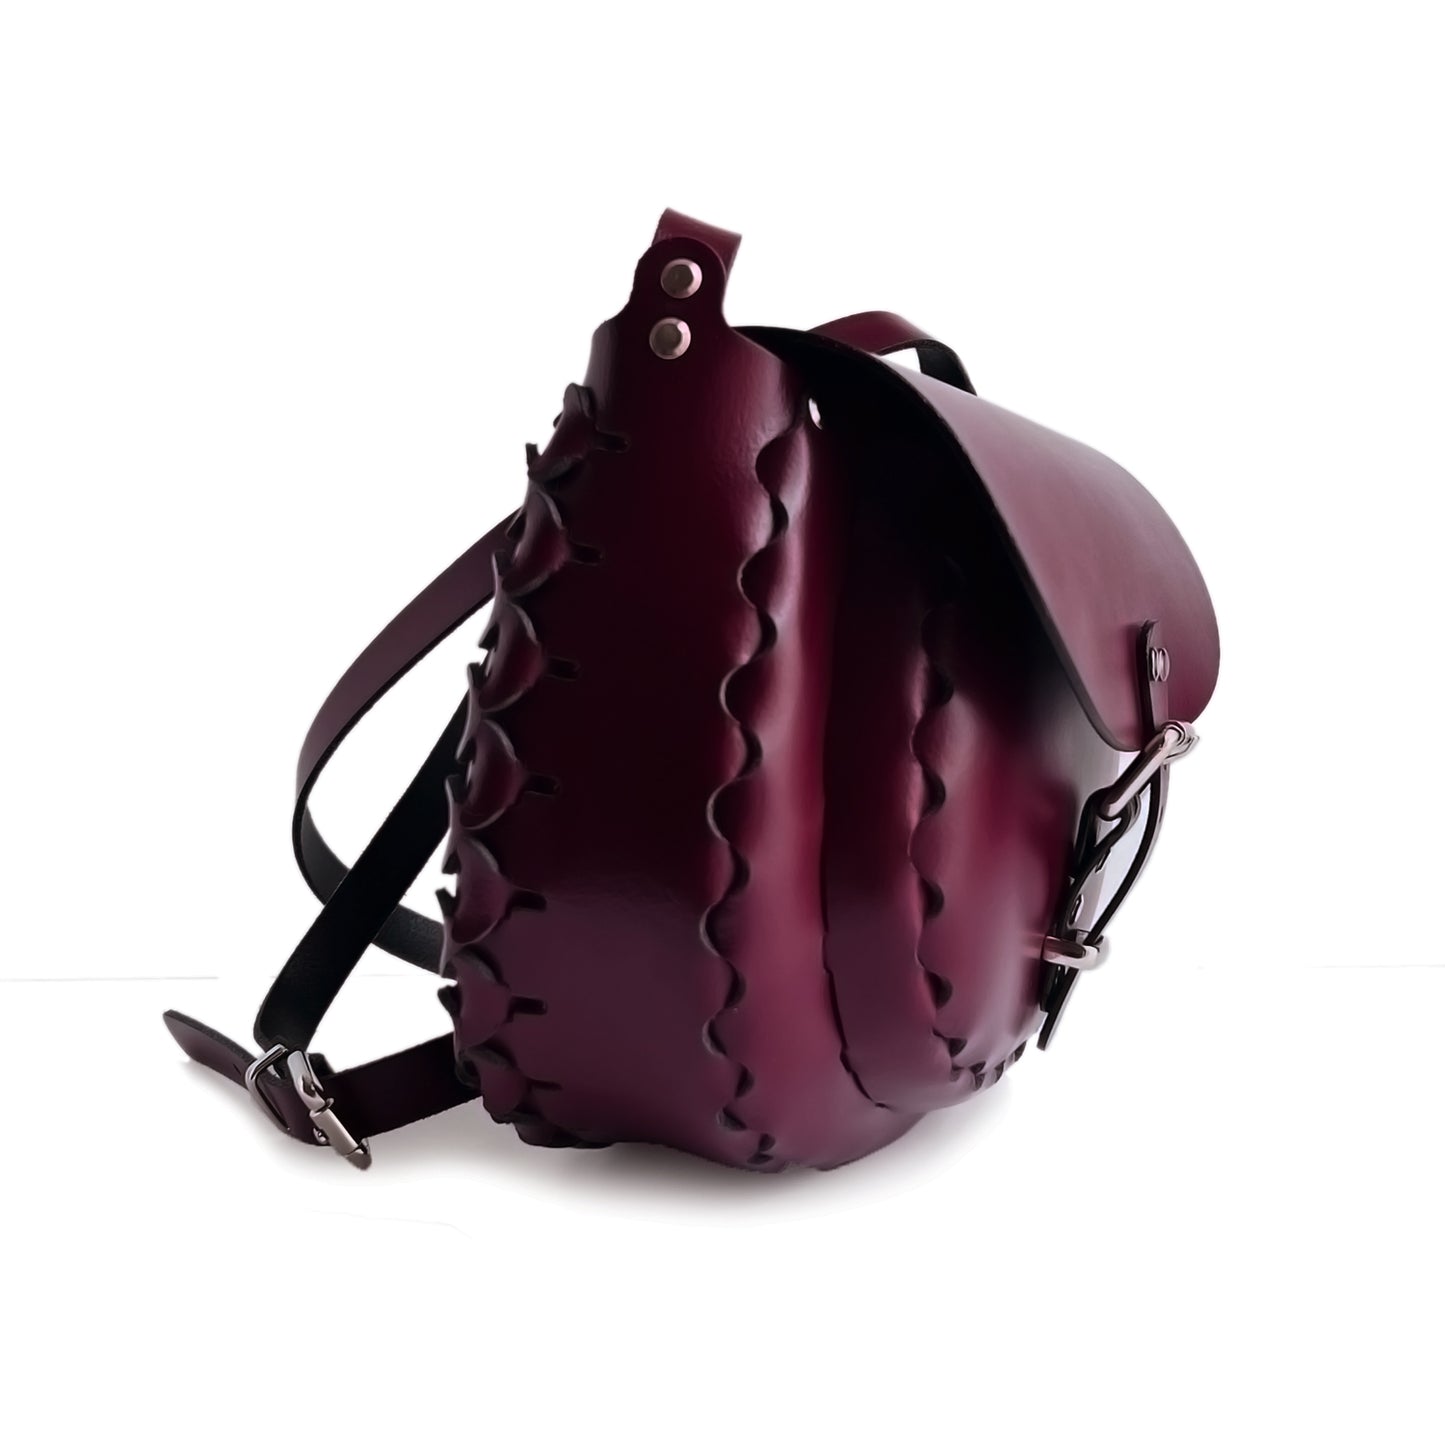 red leather satchel style saddle bag